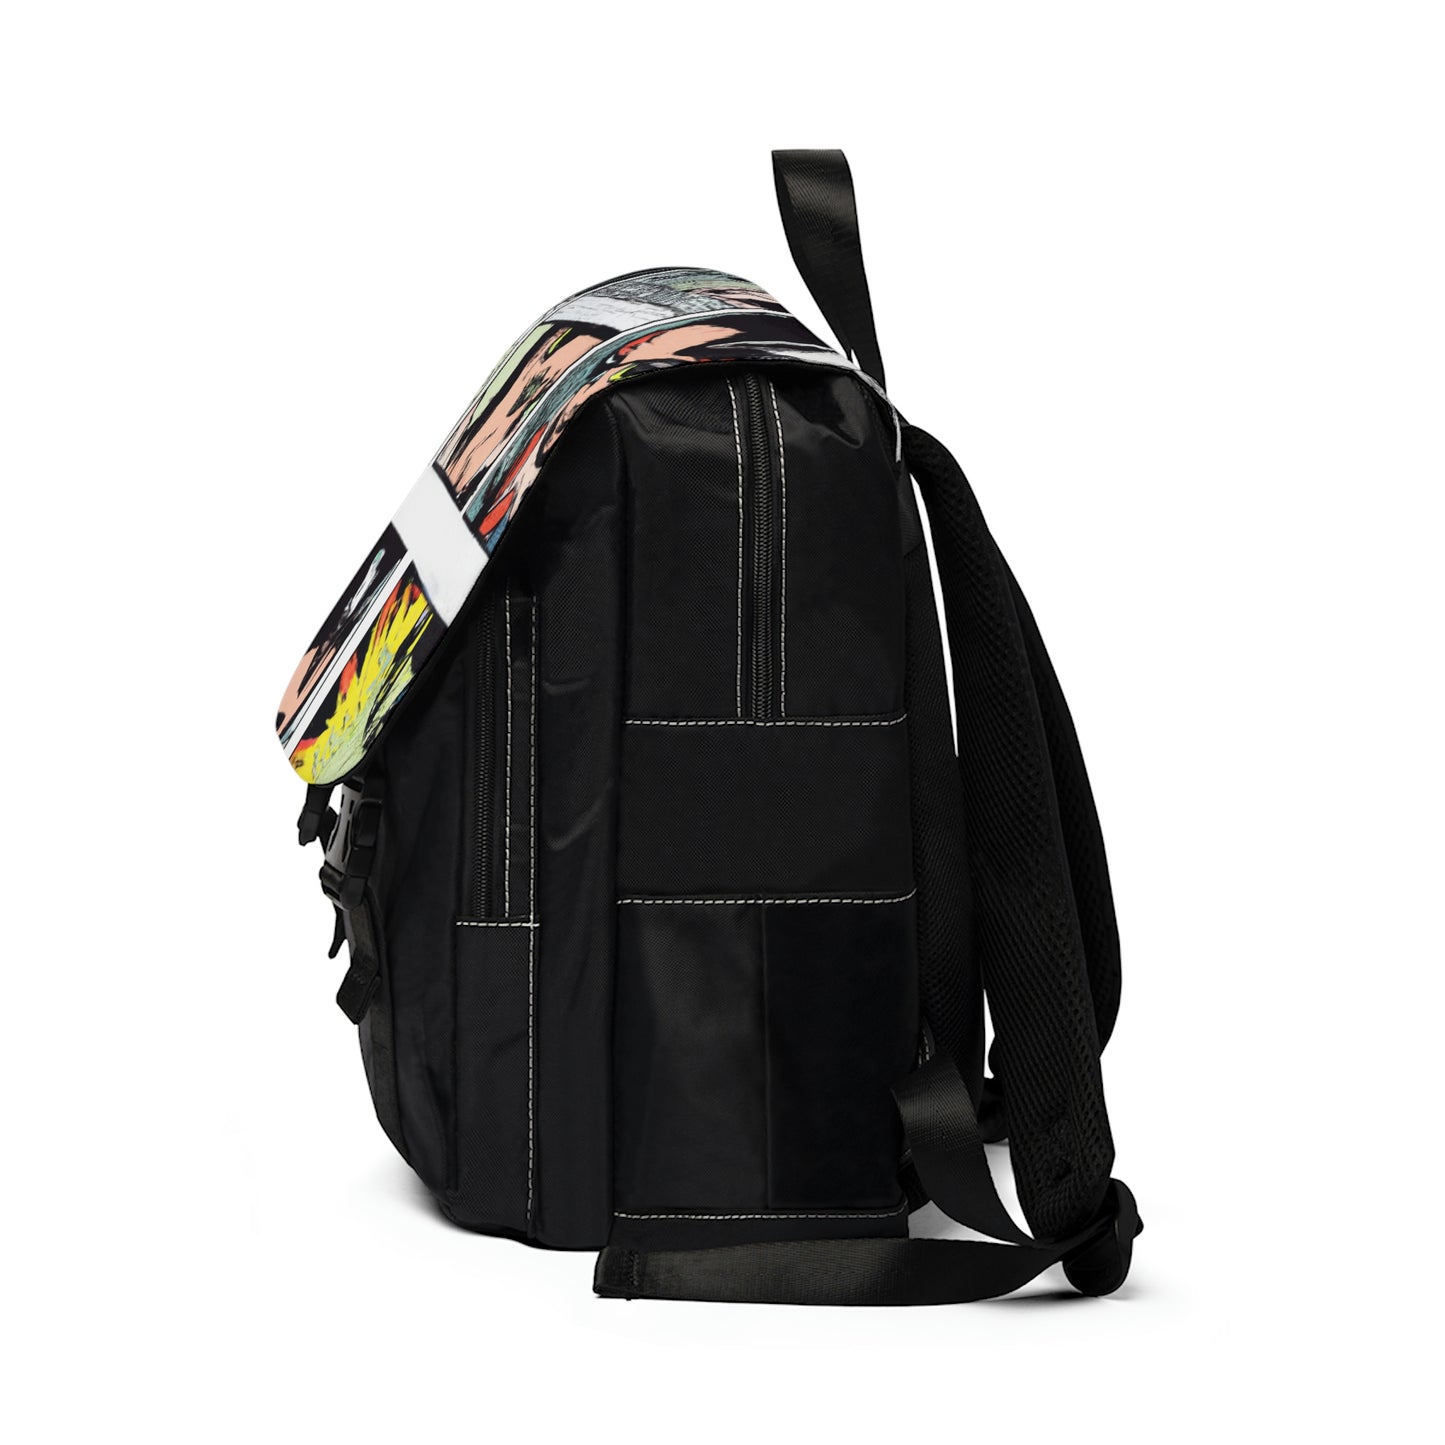 Guntherine Couture - Comic Book Shoulder Travel Backpack Bag